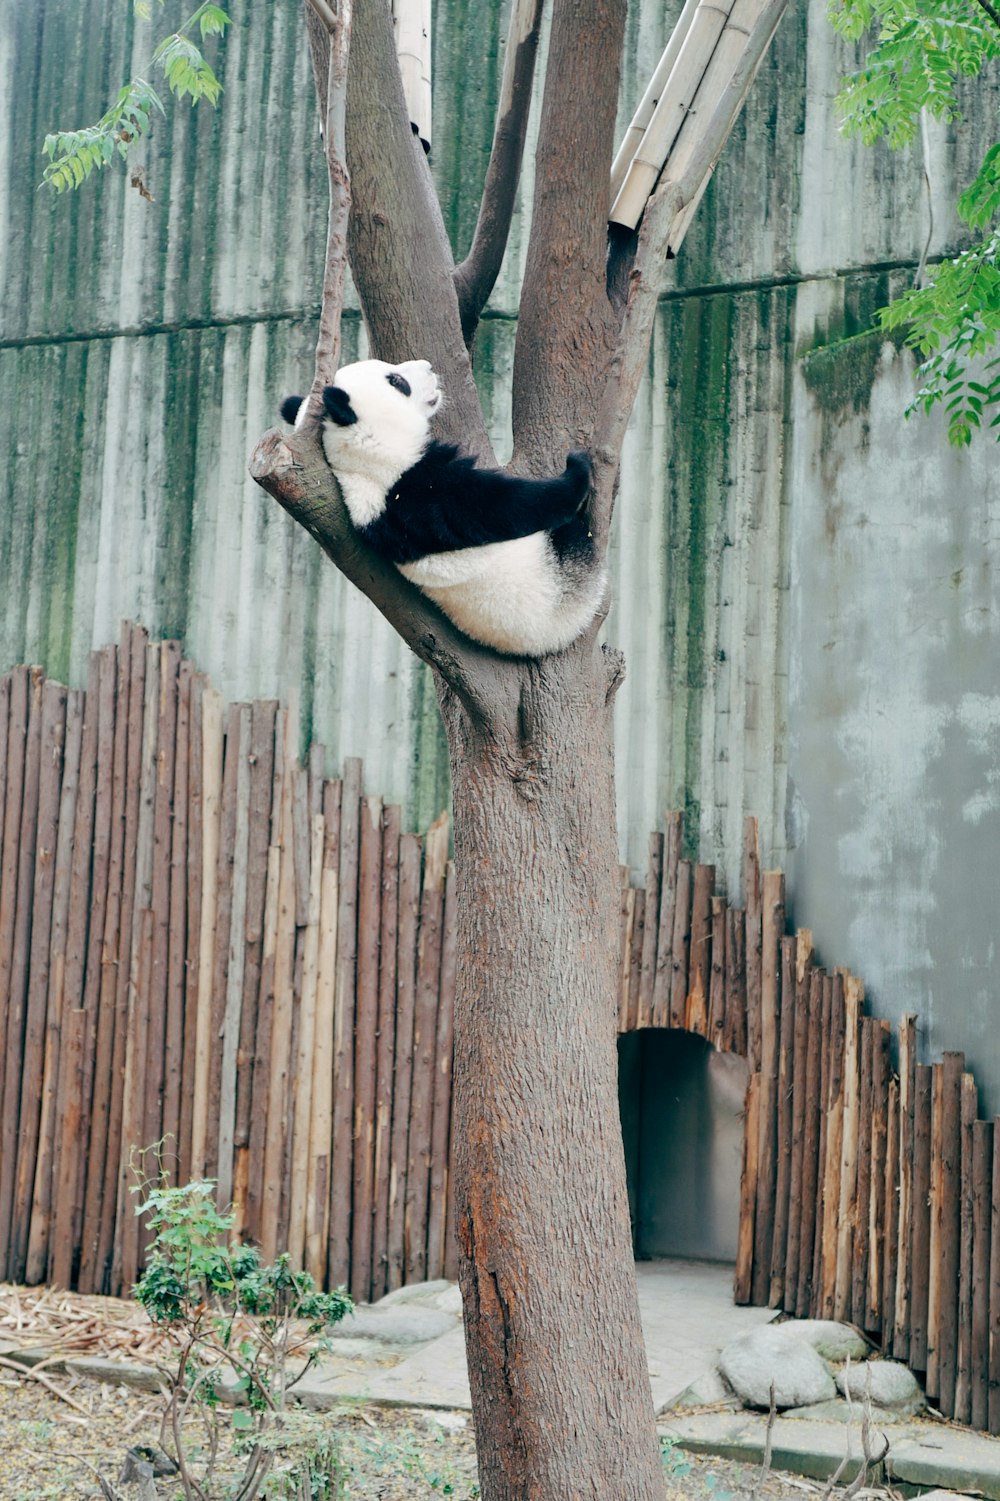 orso panda sul tronco d'albero